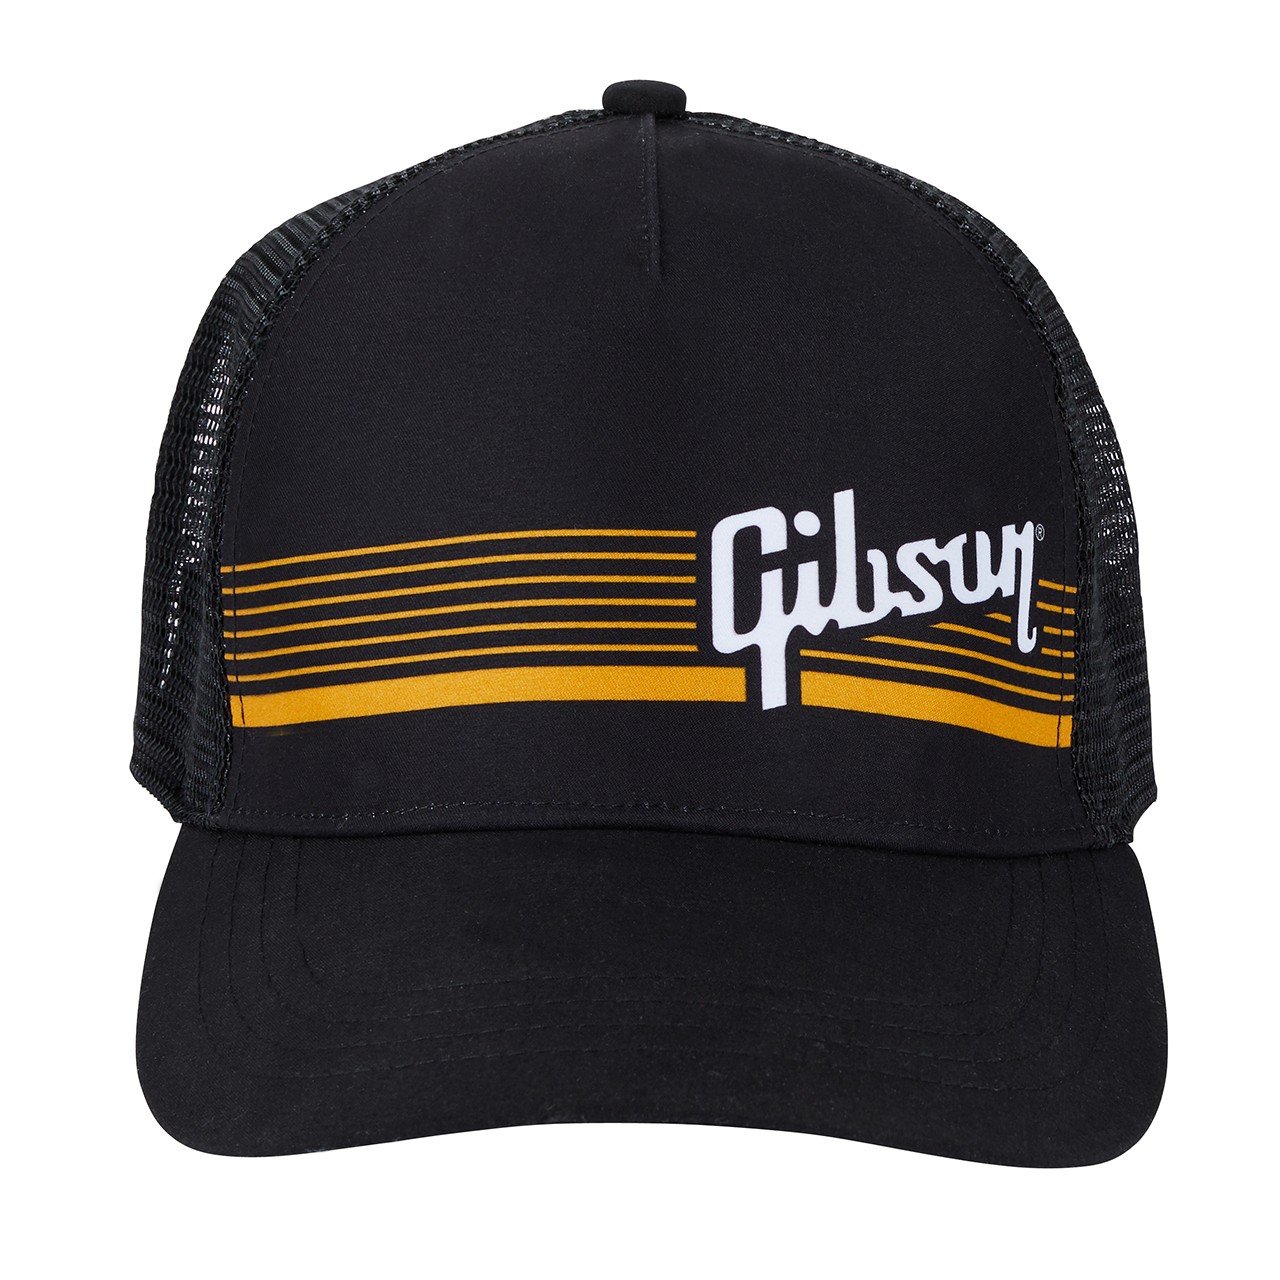 GIBSON Gold String Premium Trucker Snapback